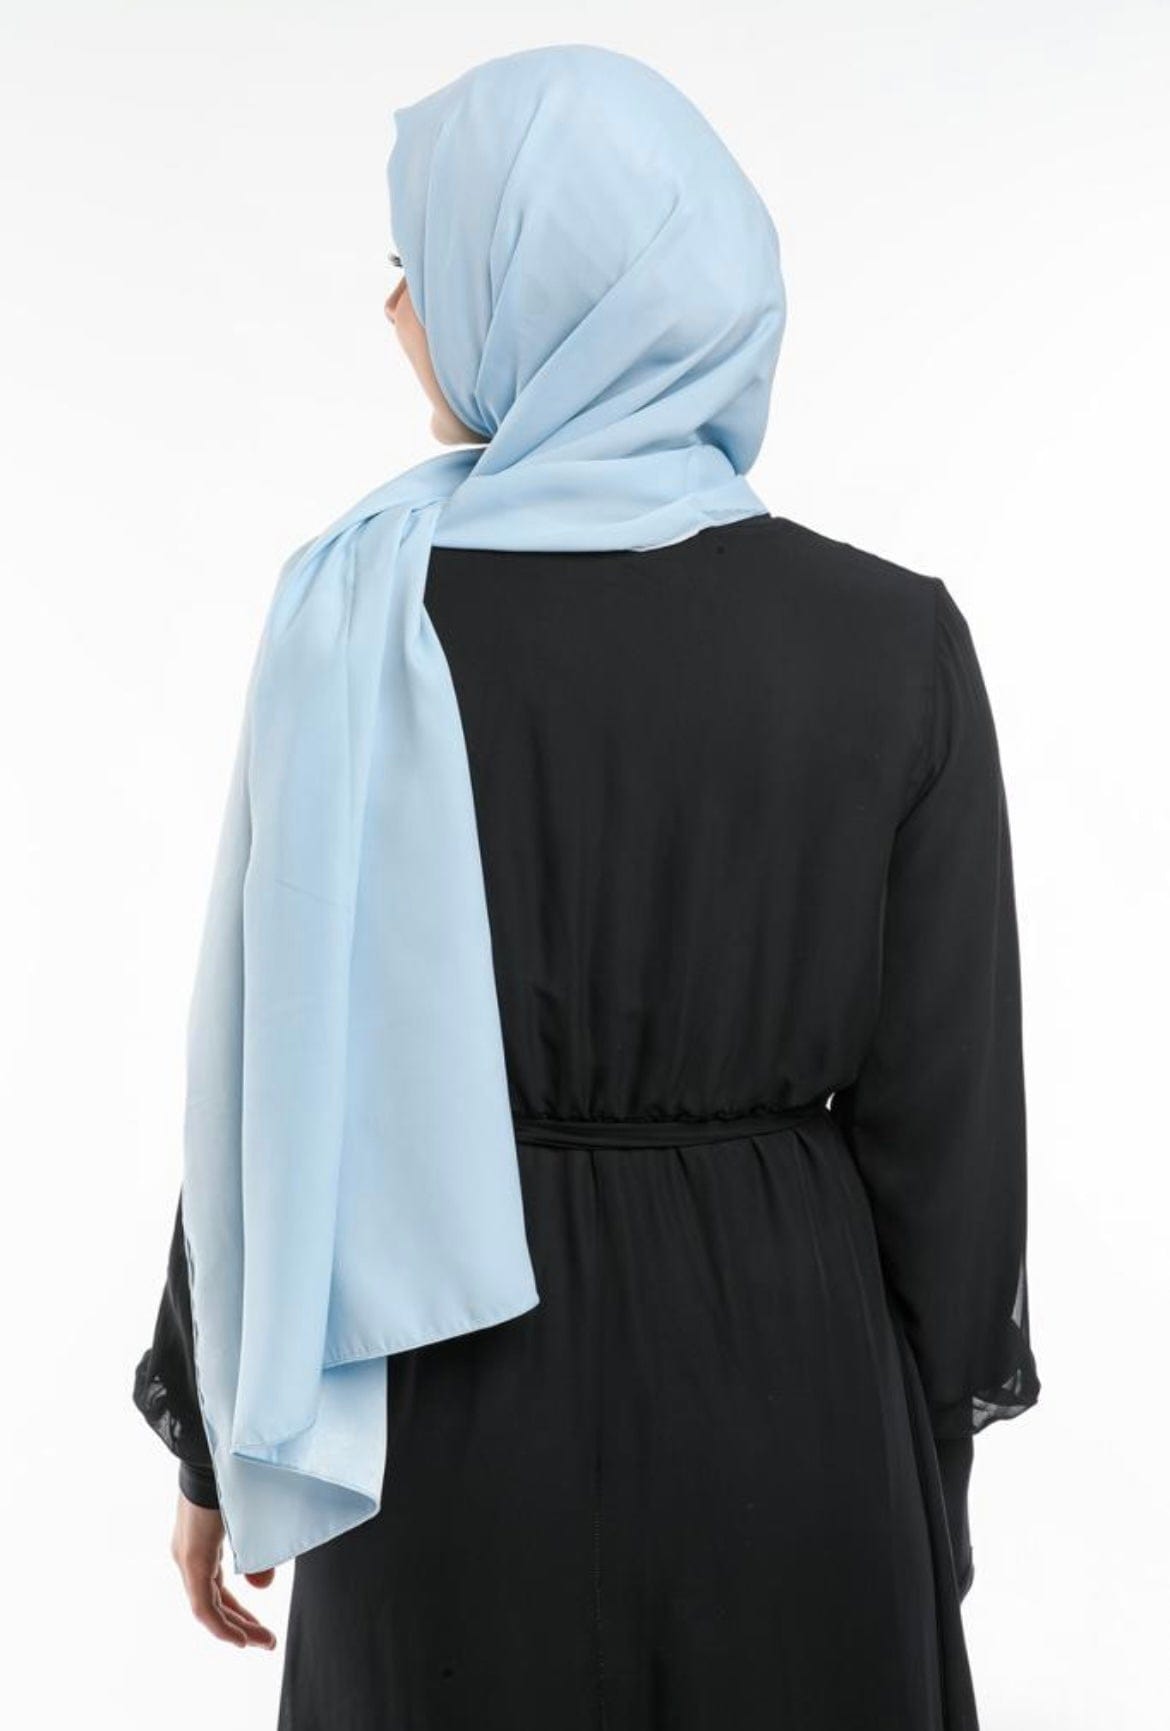 Deen Souvenir Hijabs Medina Hellblau Hijabs Medina Silk Hellblau Der ultimative Luxus | DeenSouvenir